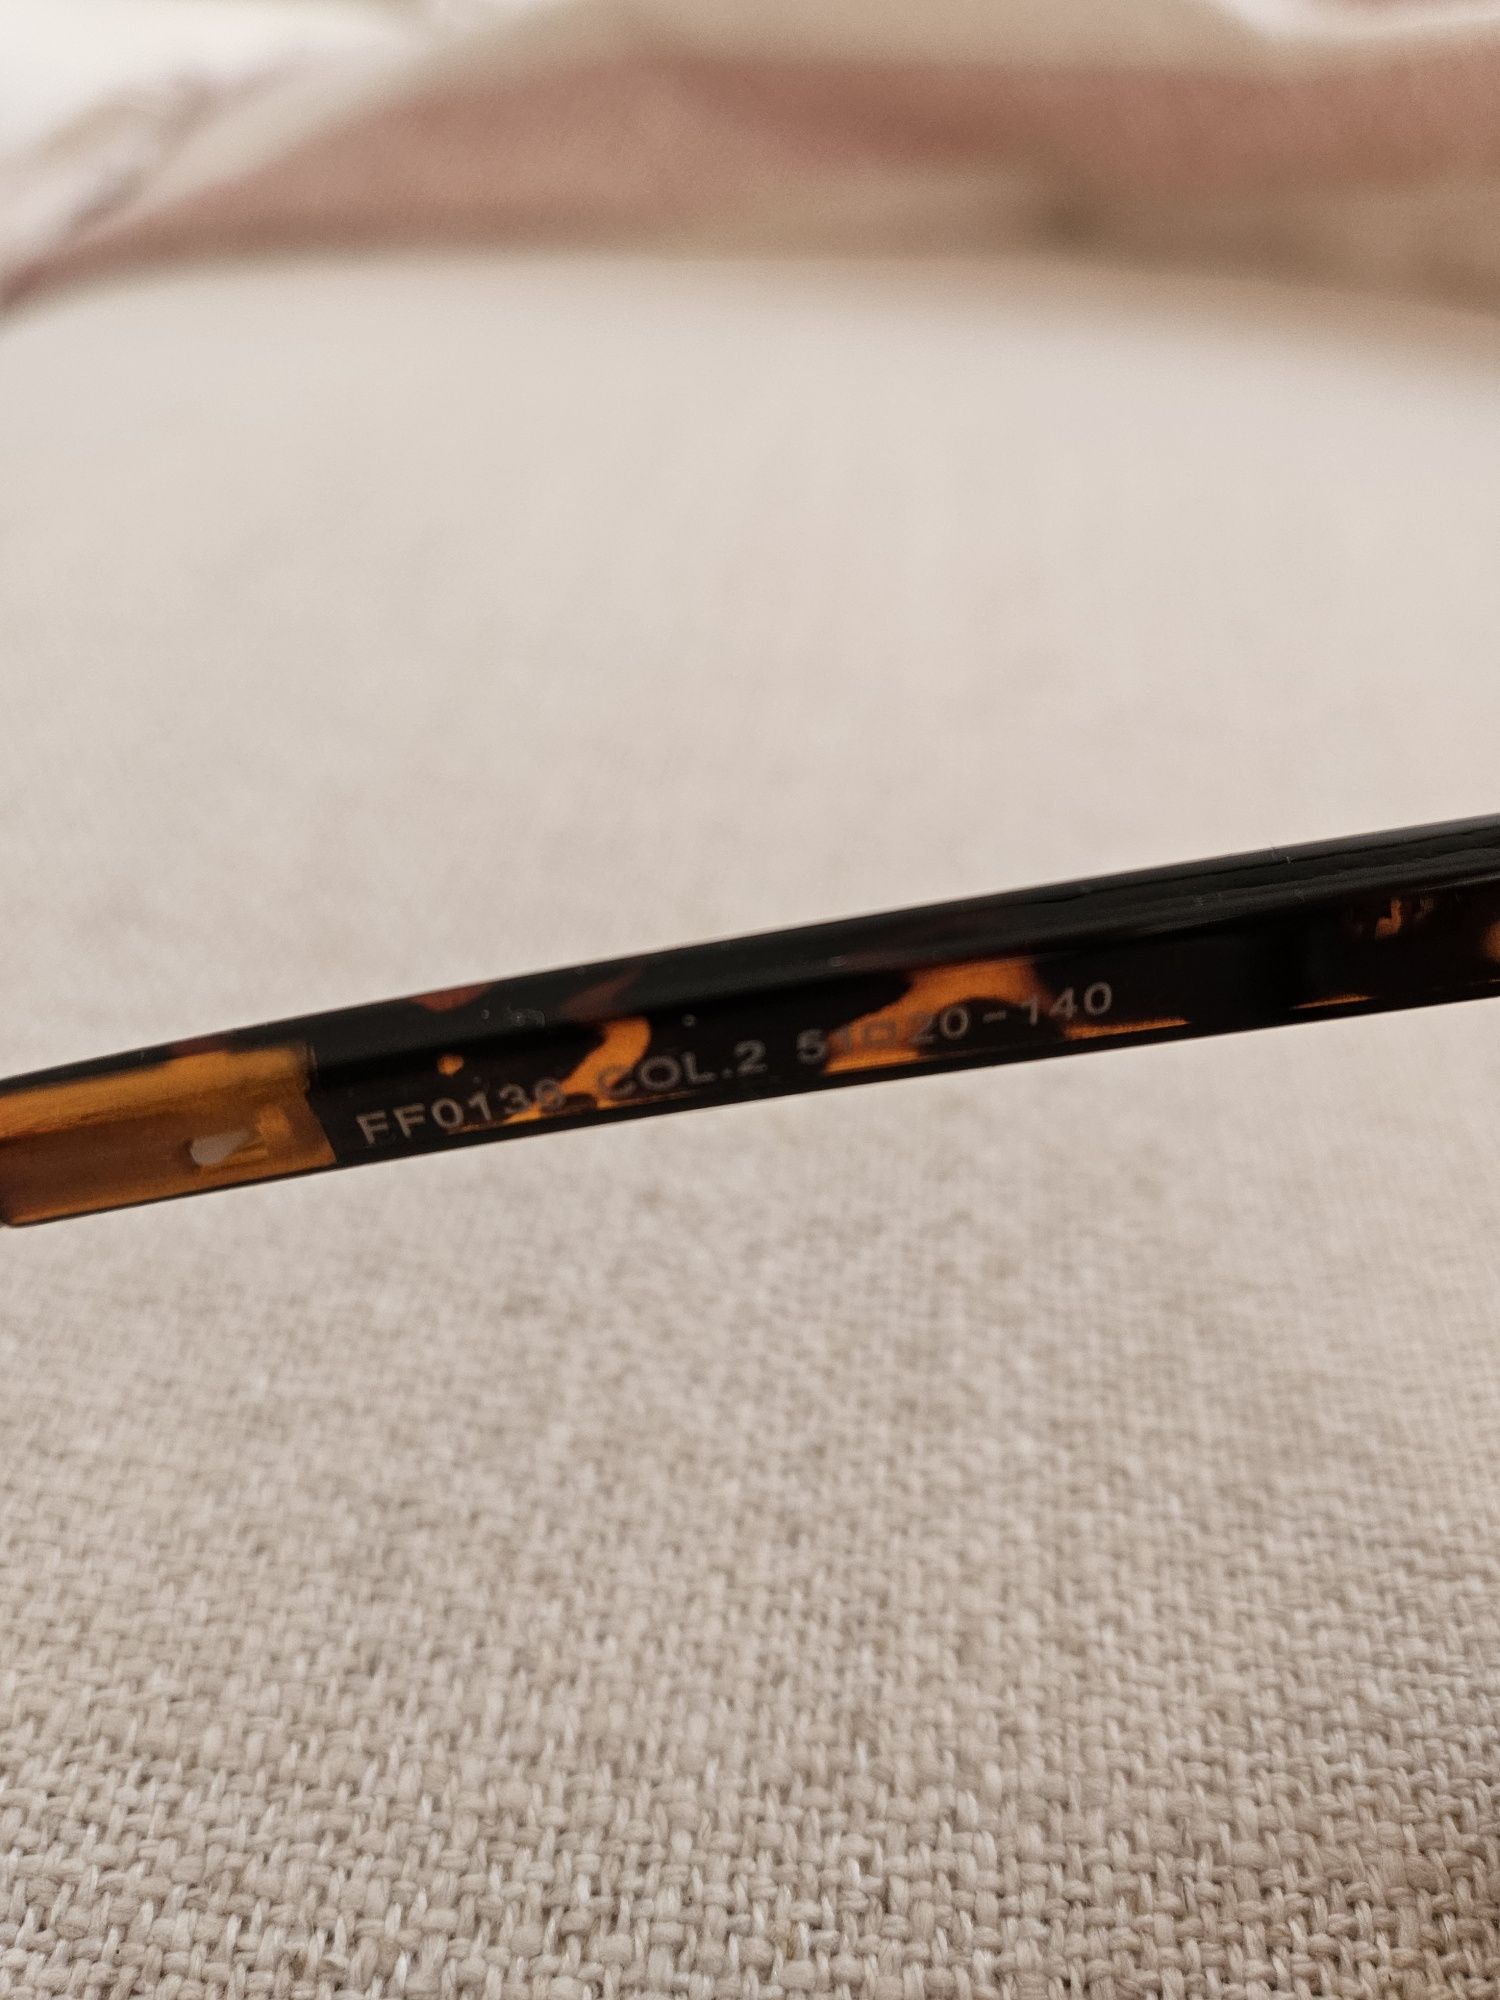 Дамски Слънчеви очила модел Фенди Fendi марка Rital UV 400